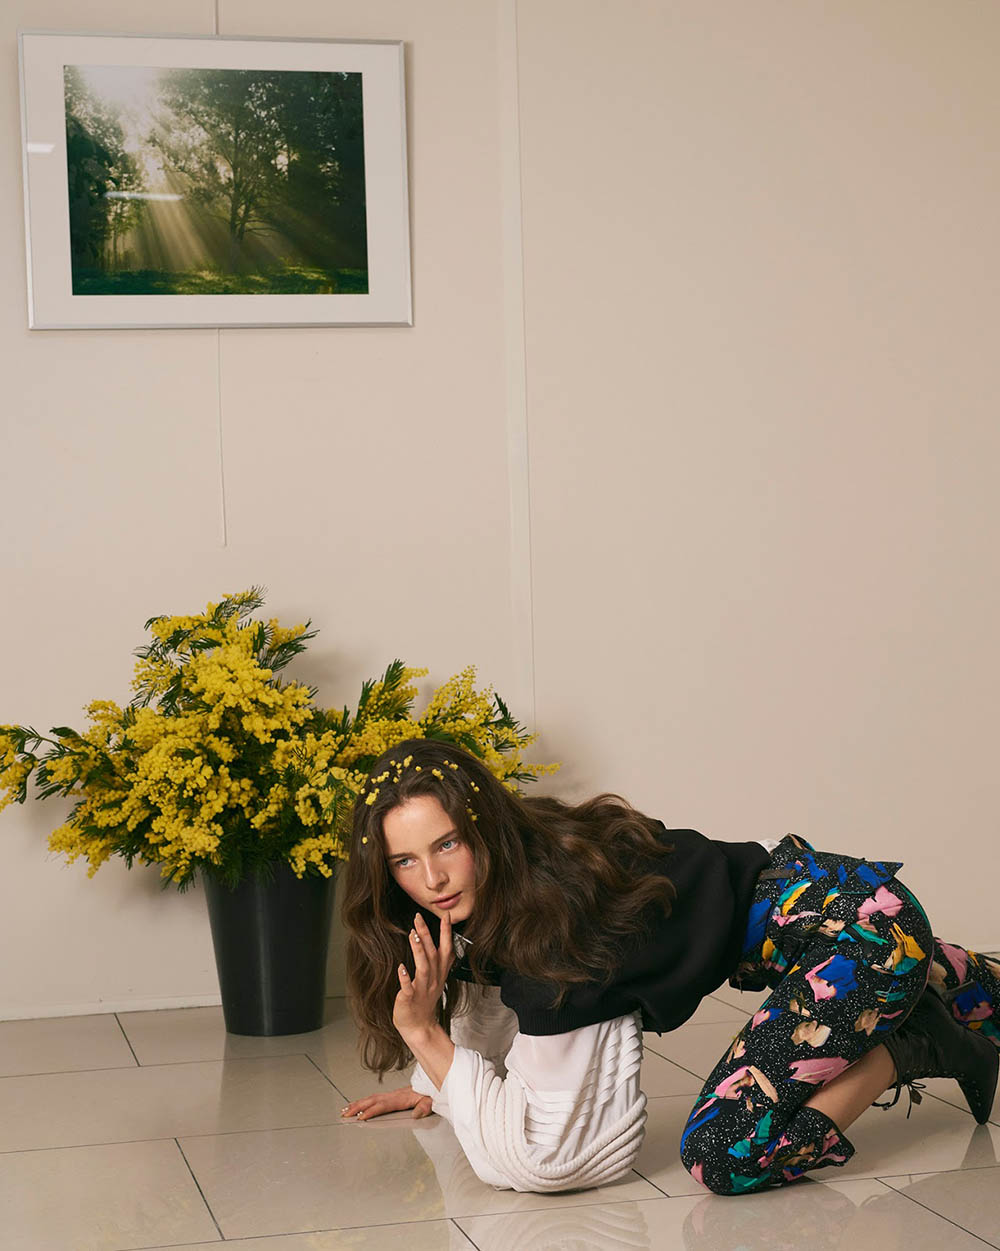 Anna de Rijk by Naomi Yang for Vogue Taiwan April 2019